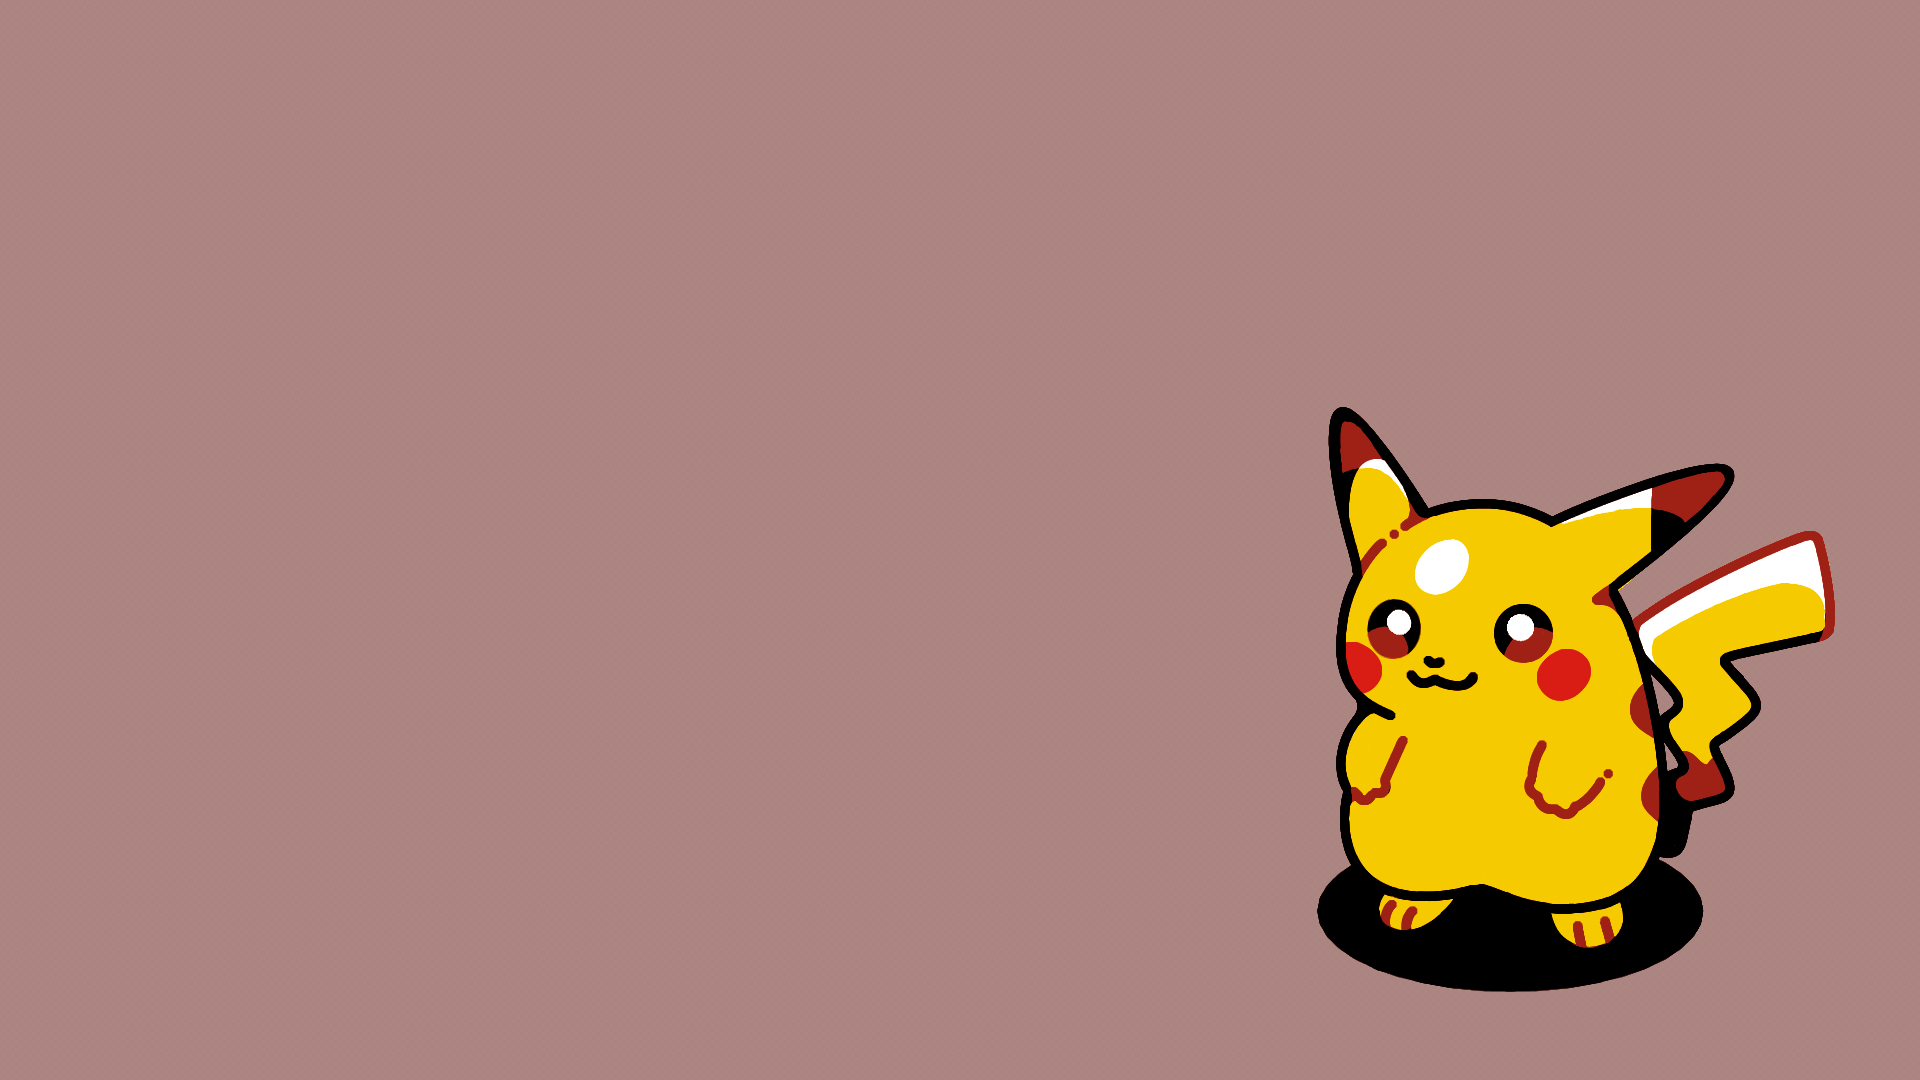 Video Games Minimalism Nintendo Pokemon Pikachu Simple Background Fictional Creatures 1920x1080